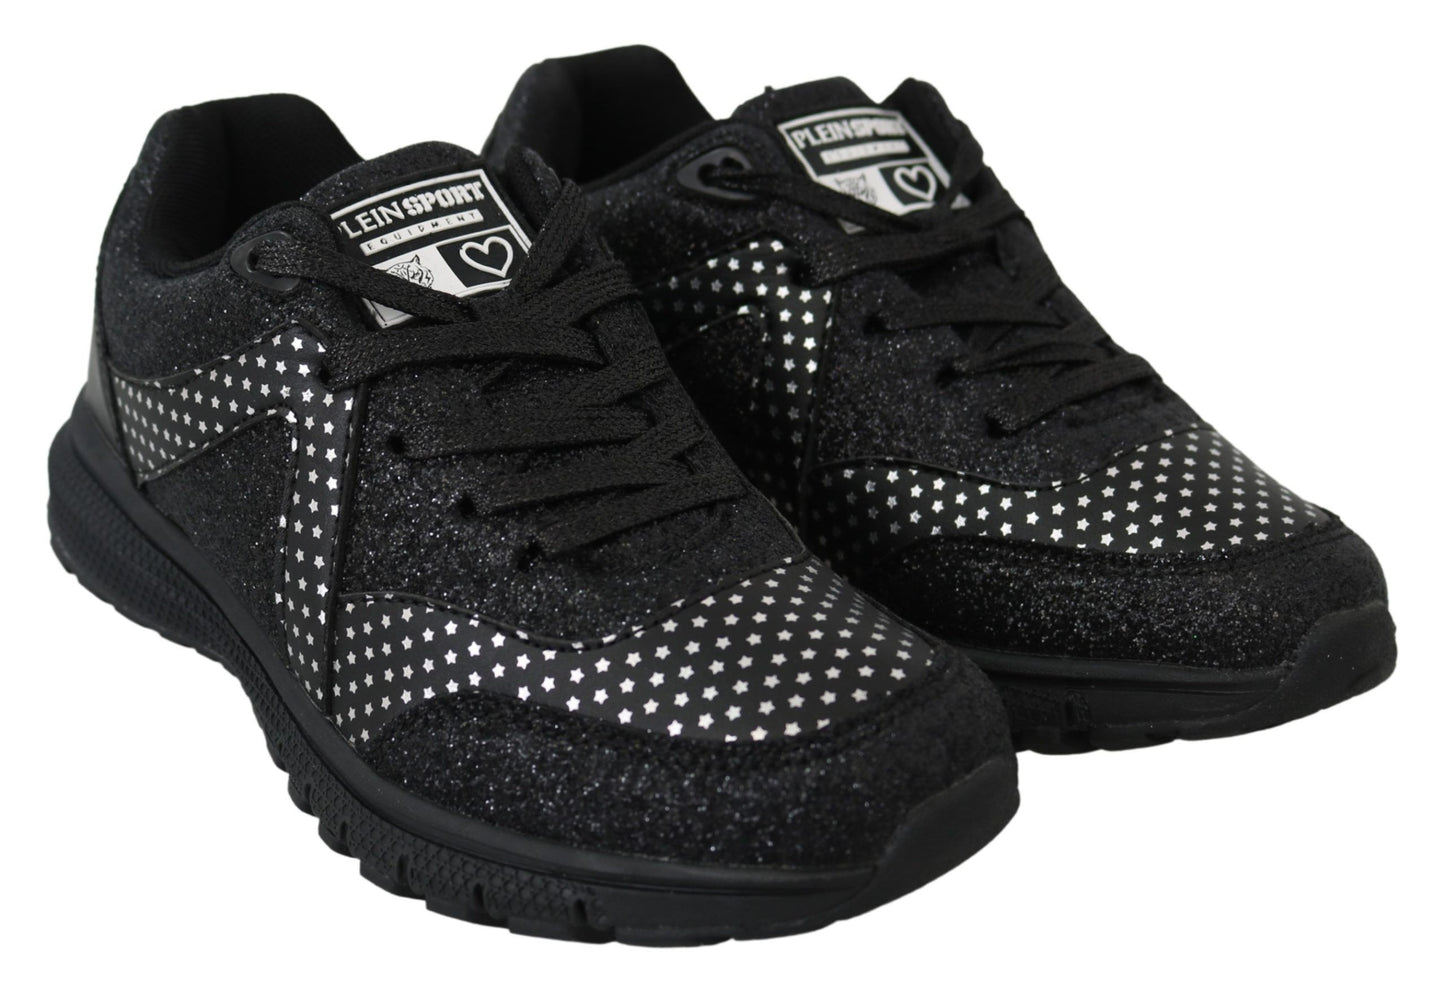 Plein Sport Black Polyester Runner Jasmines Sneakers Shoes